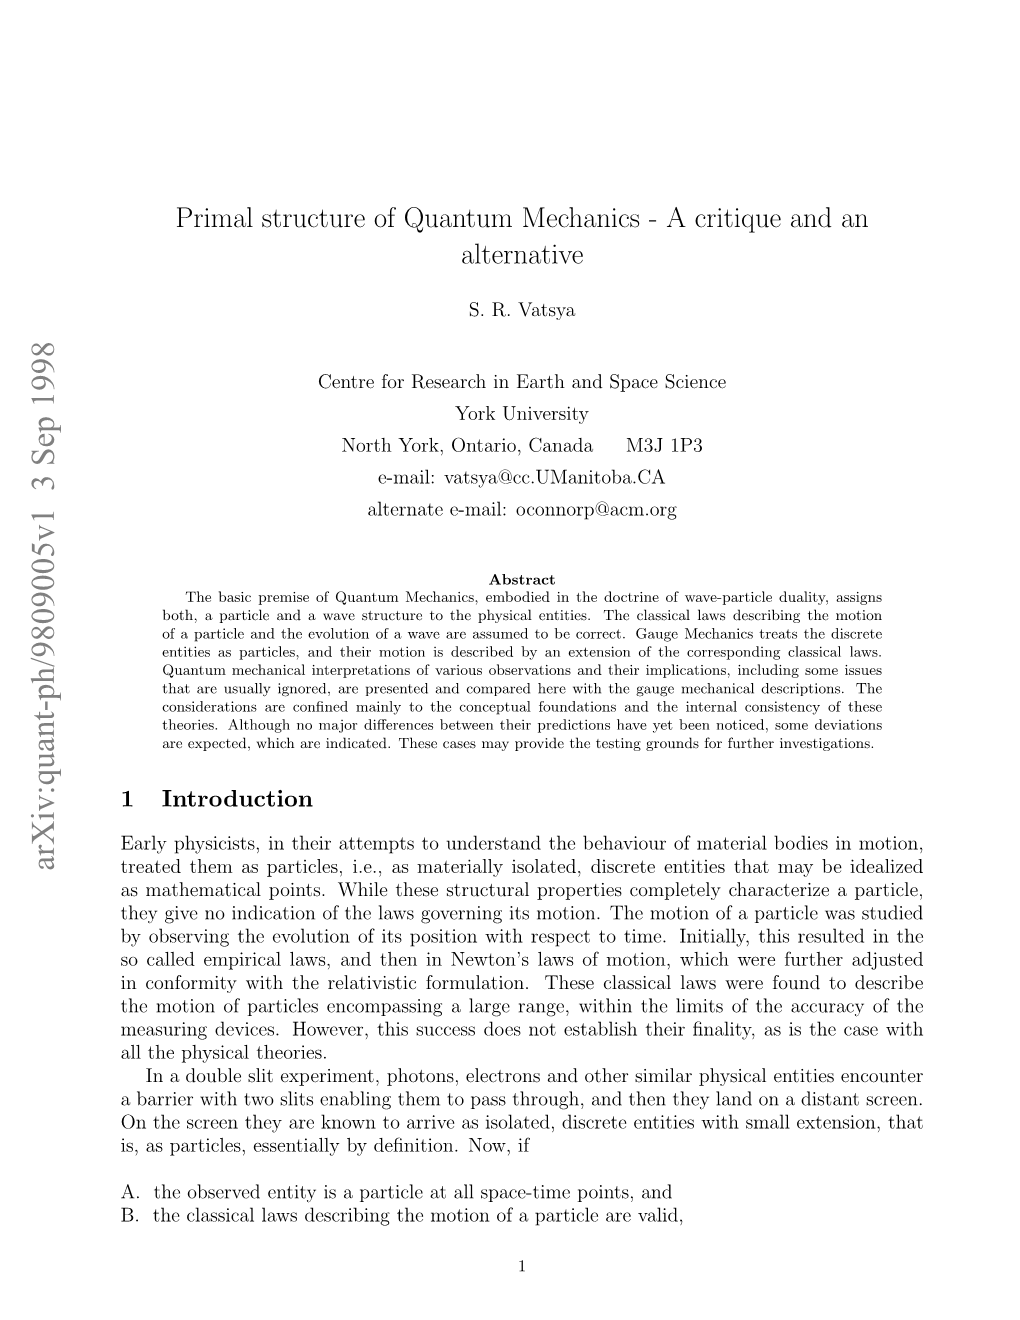 Primal Structure of Quantum Mechanics-A Critique and An